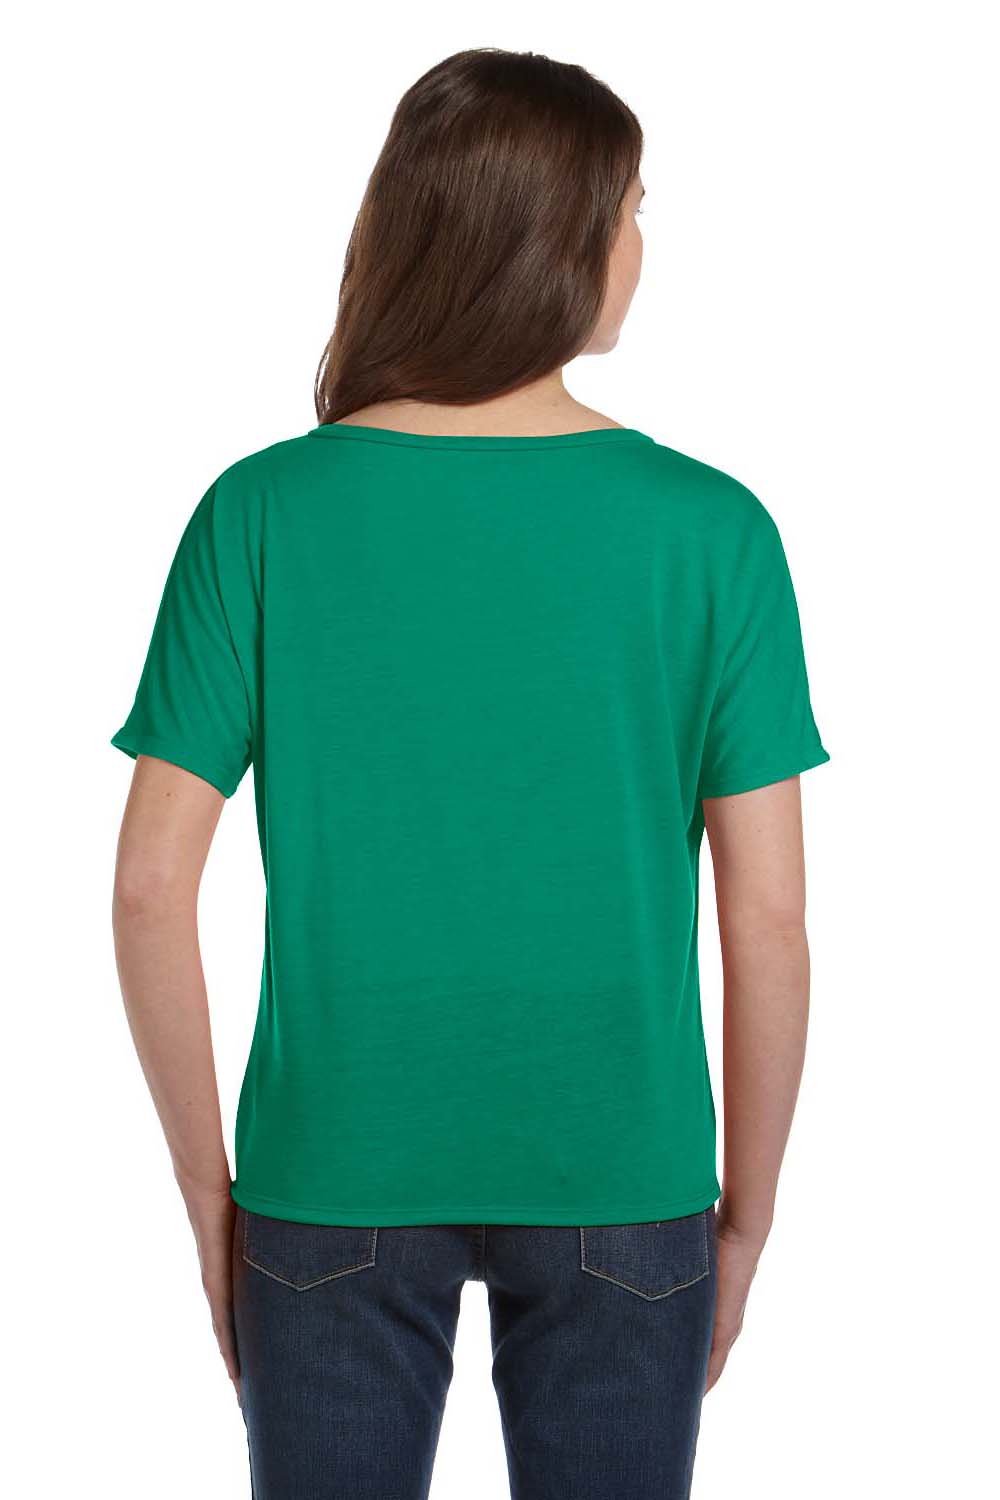 Bella + Canvas 8815 Womens Slouchy Short Sleeve V-Neck T-Shirt Kelly Green Back